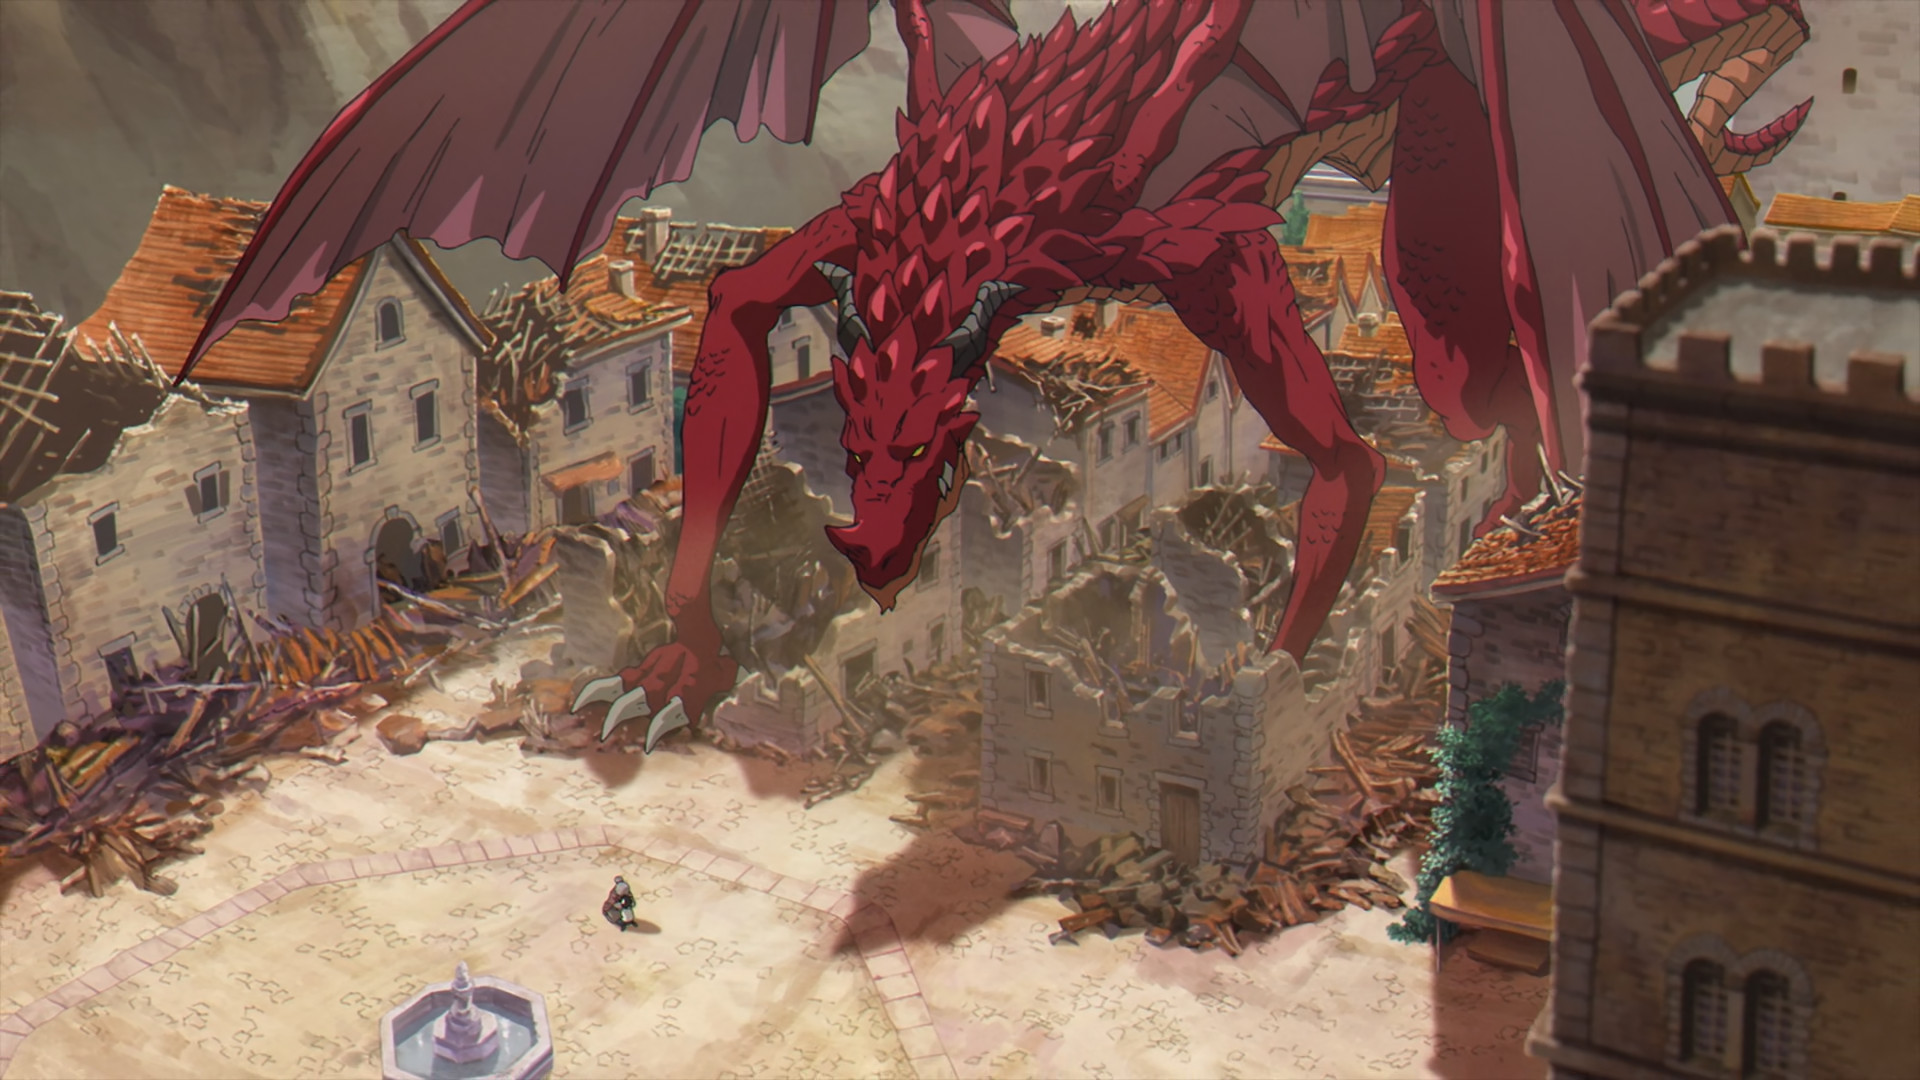 Dragon destroying the city